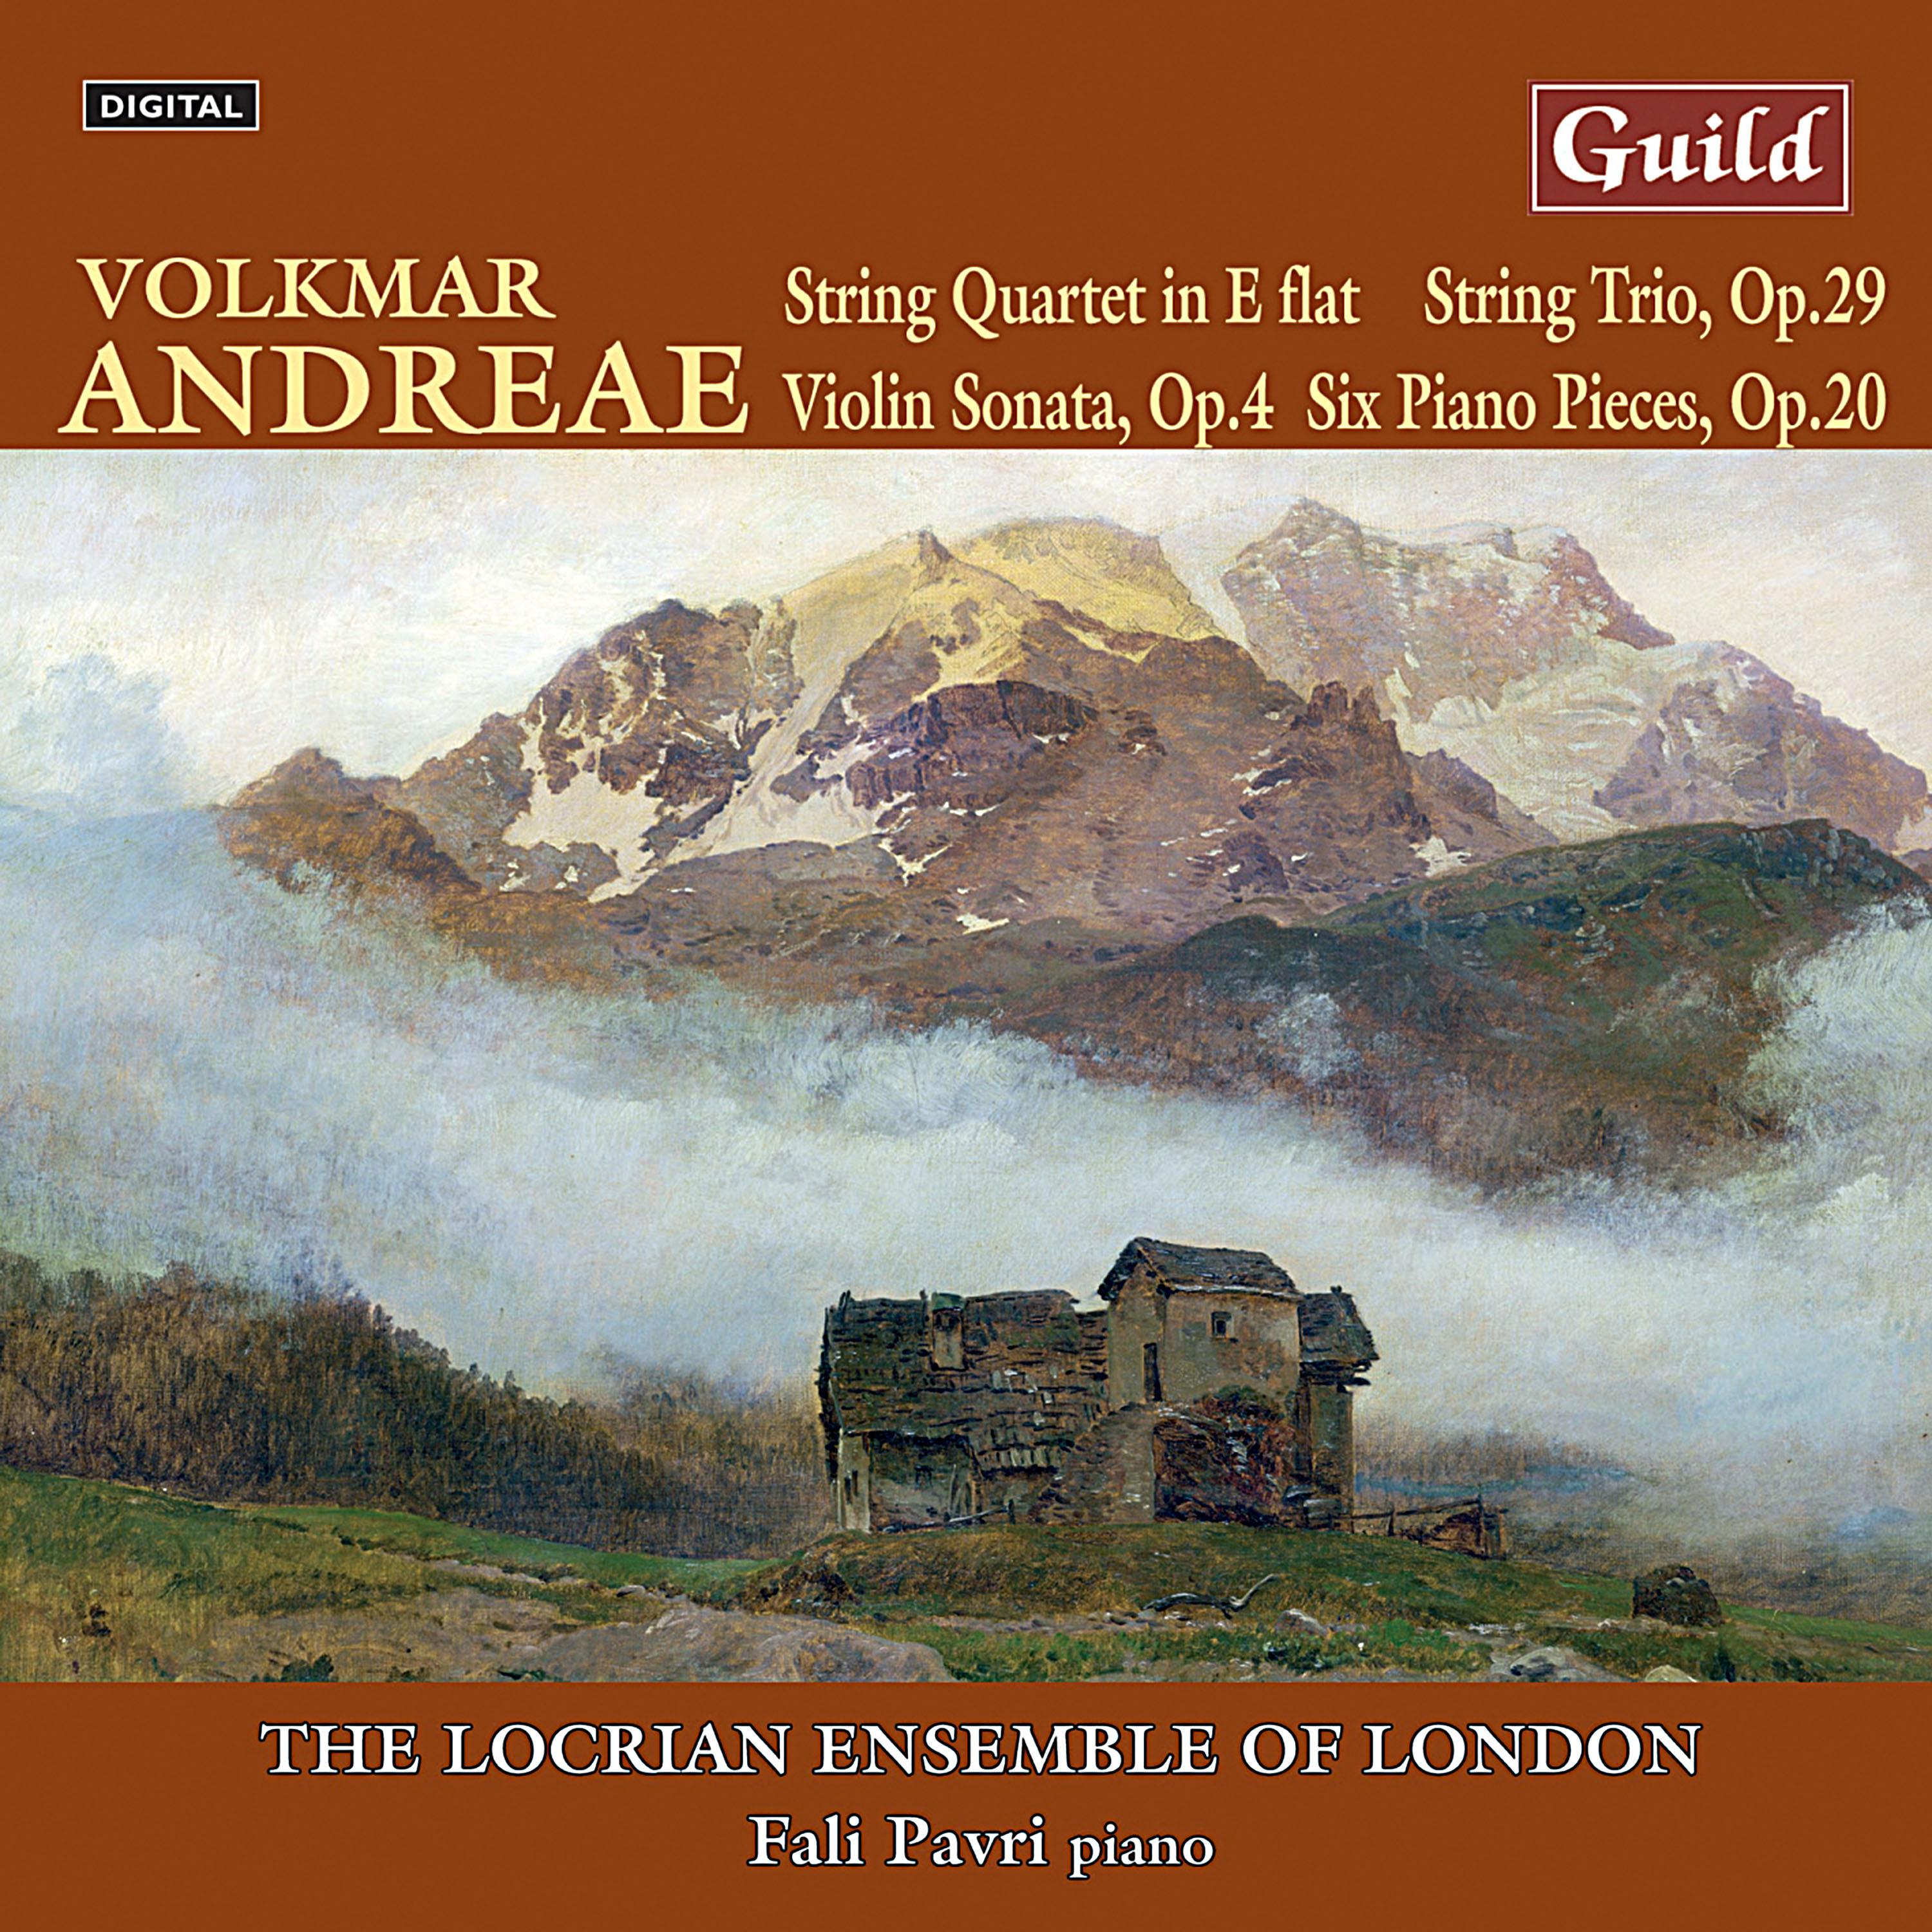 The Locrian Ensemble of London: Rita Manning - String Trio in D minor, Op. 29 (1917) - II. Allegretto